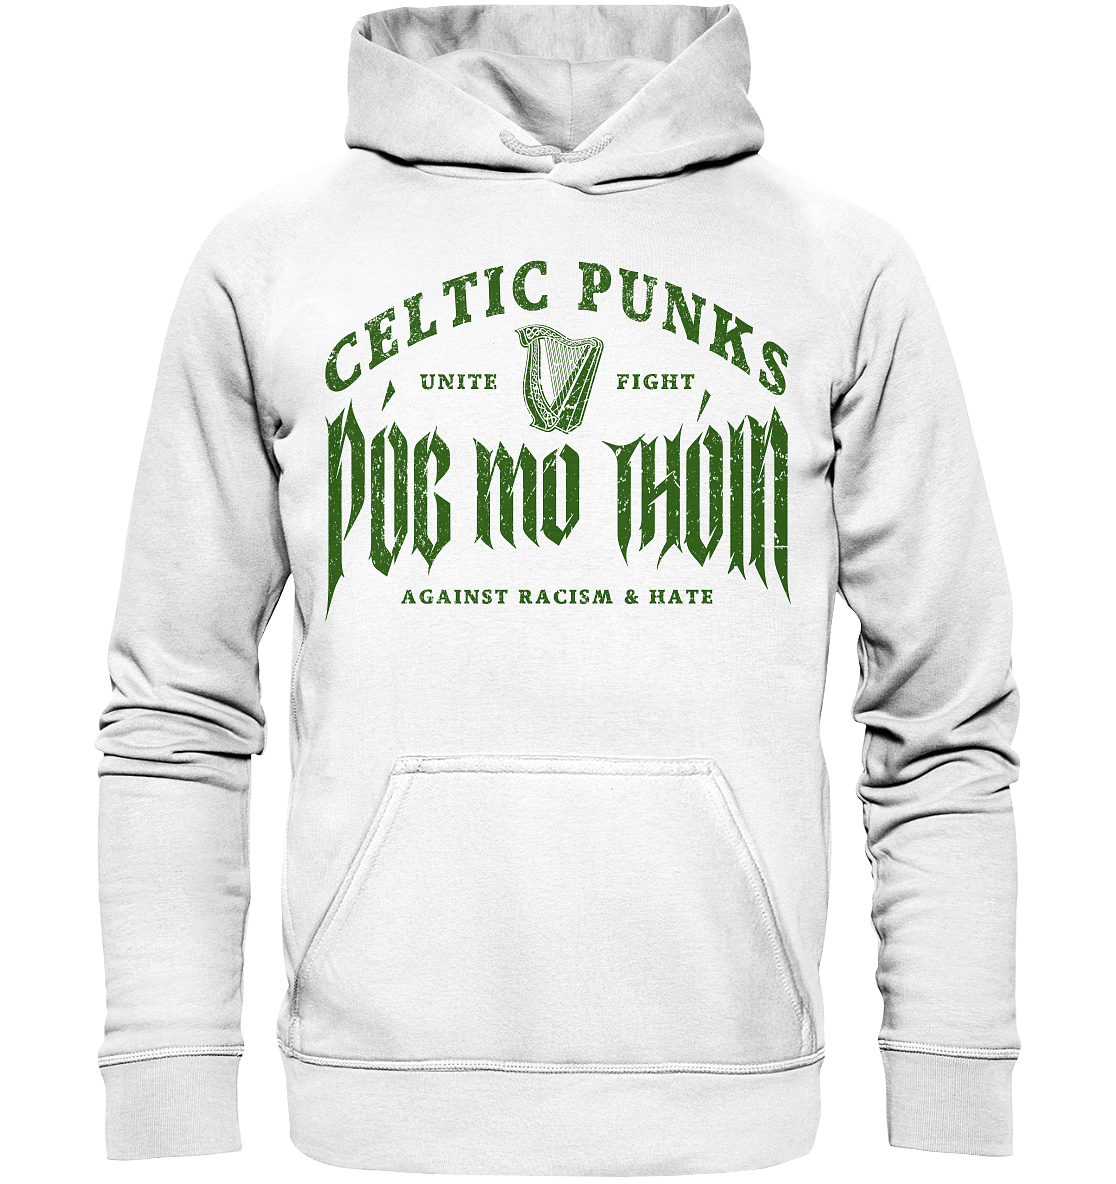 Póg Mo Thóin Streetwear "Celtic Punks Against Racism & Hate / Unite & Fight" - Basic Unisex Hoodie